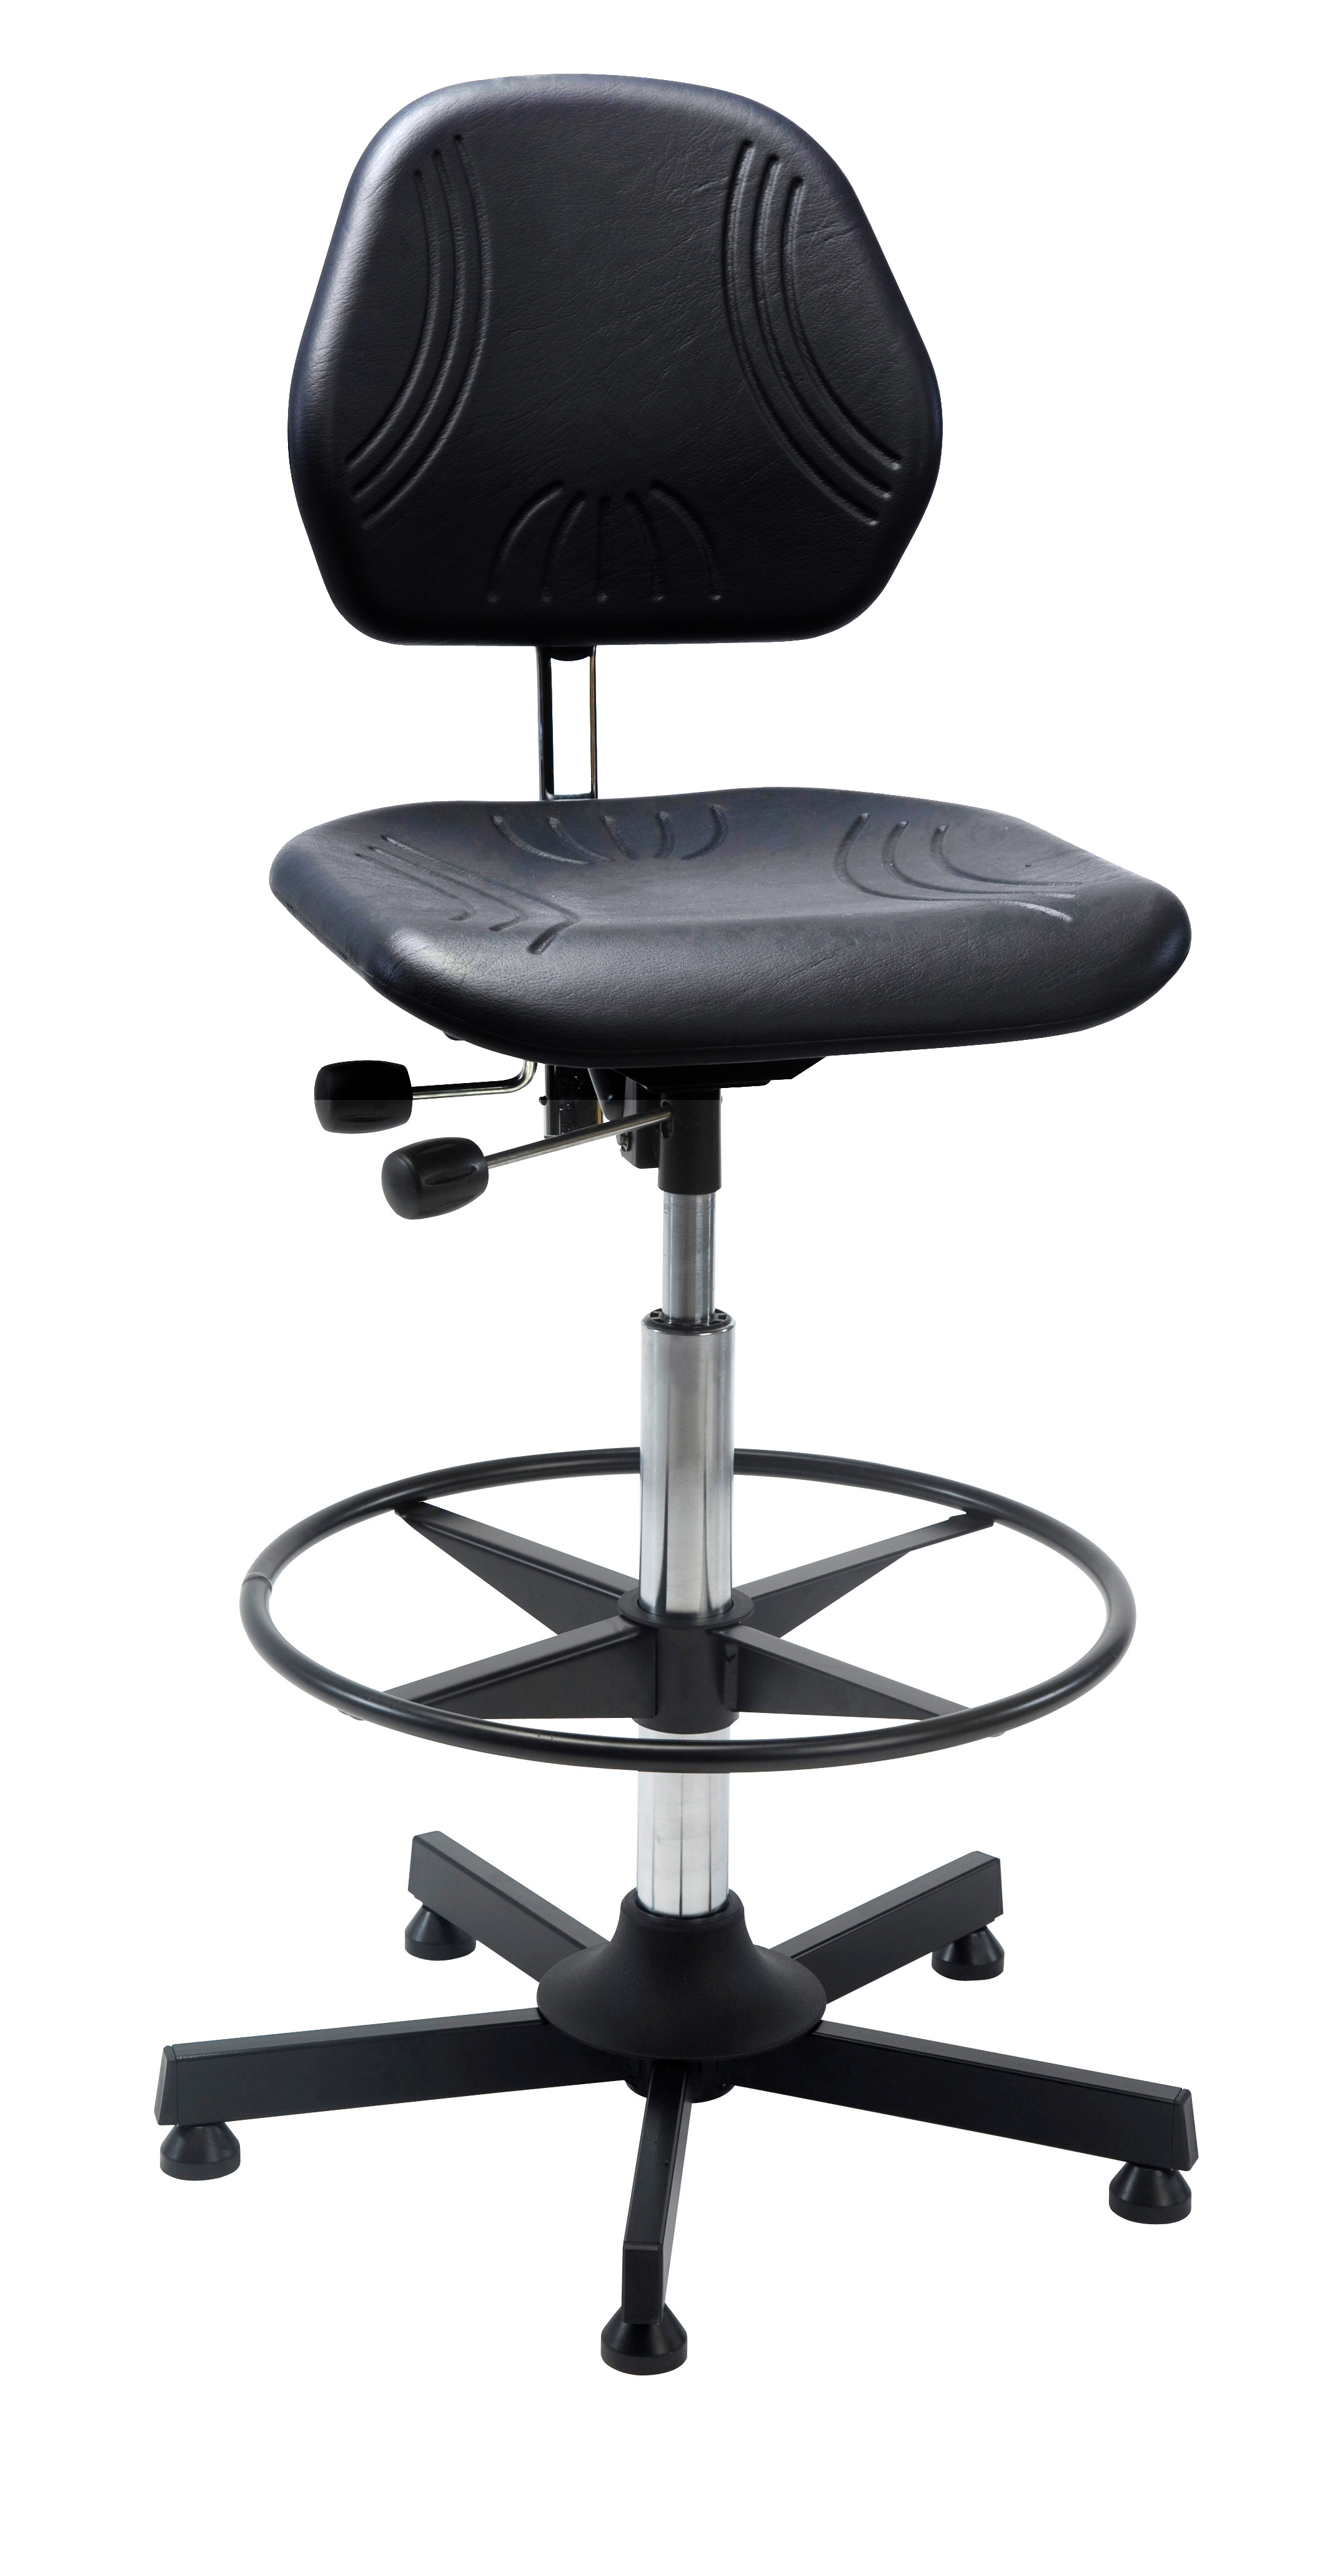 Bott Industrial Chair Adjustable Height 630-890mm - 88601009